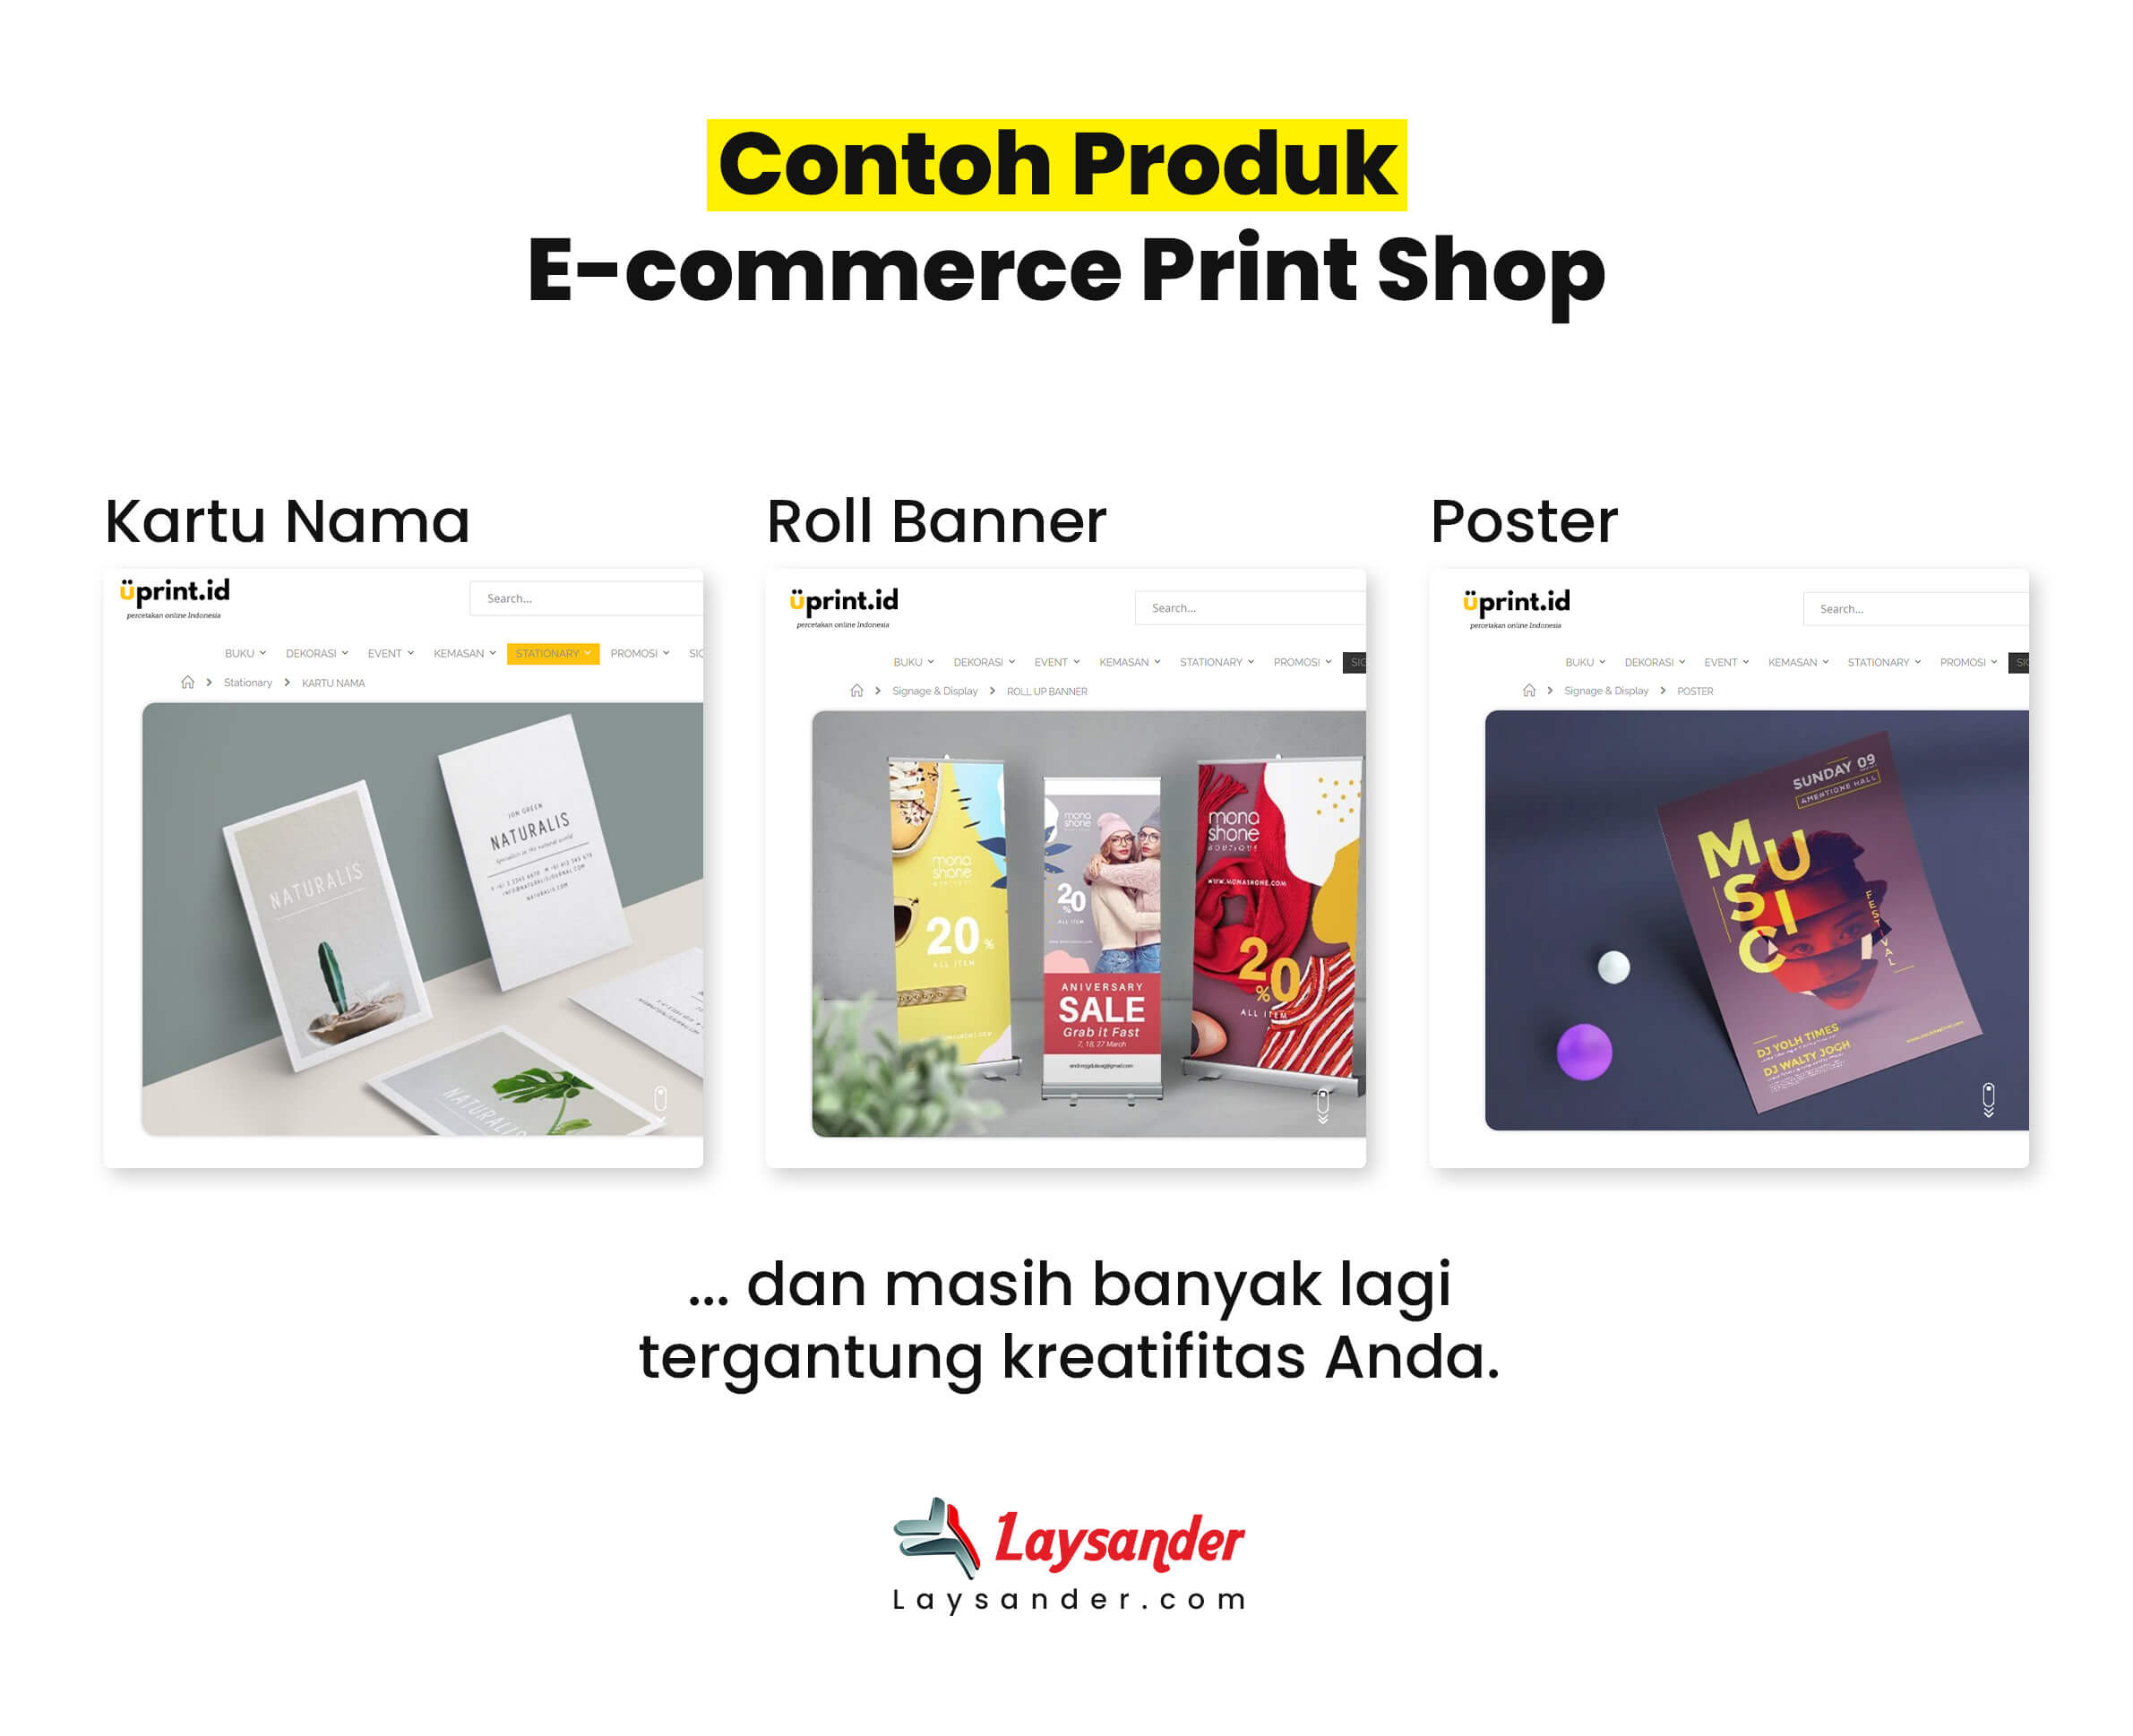 Contoh Produk E-Commerce Print Shop